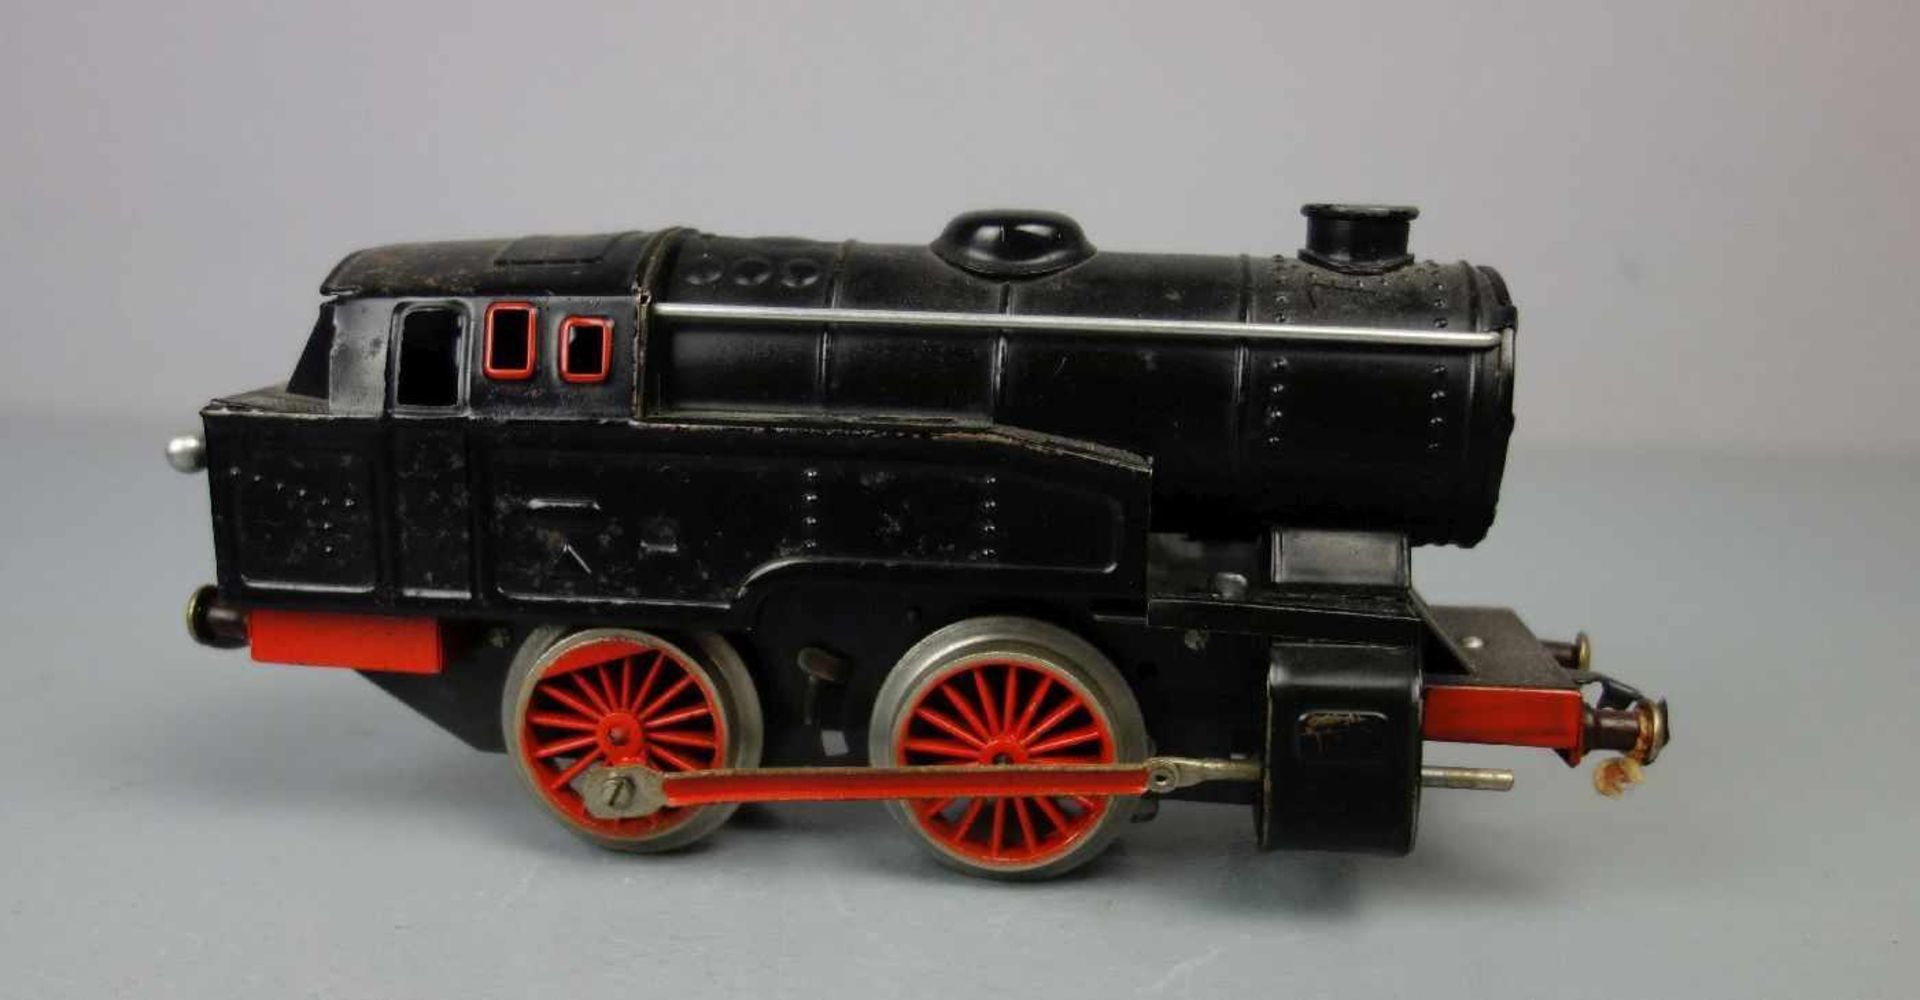 BLECHSPIELZEUG / EISENBAHN-SET: Dampflok-Set im Karton / tin toy railway, um 1950, Manufaktur - Bild 10 aus 12